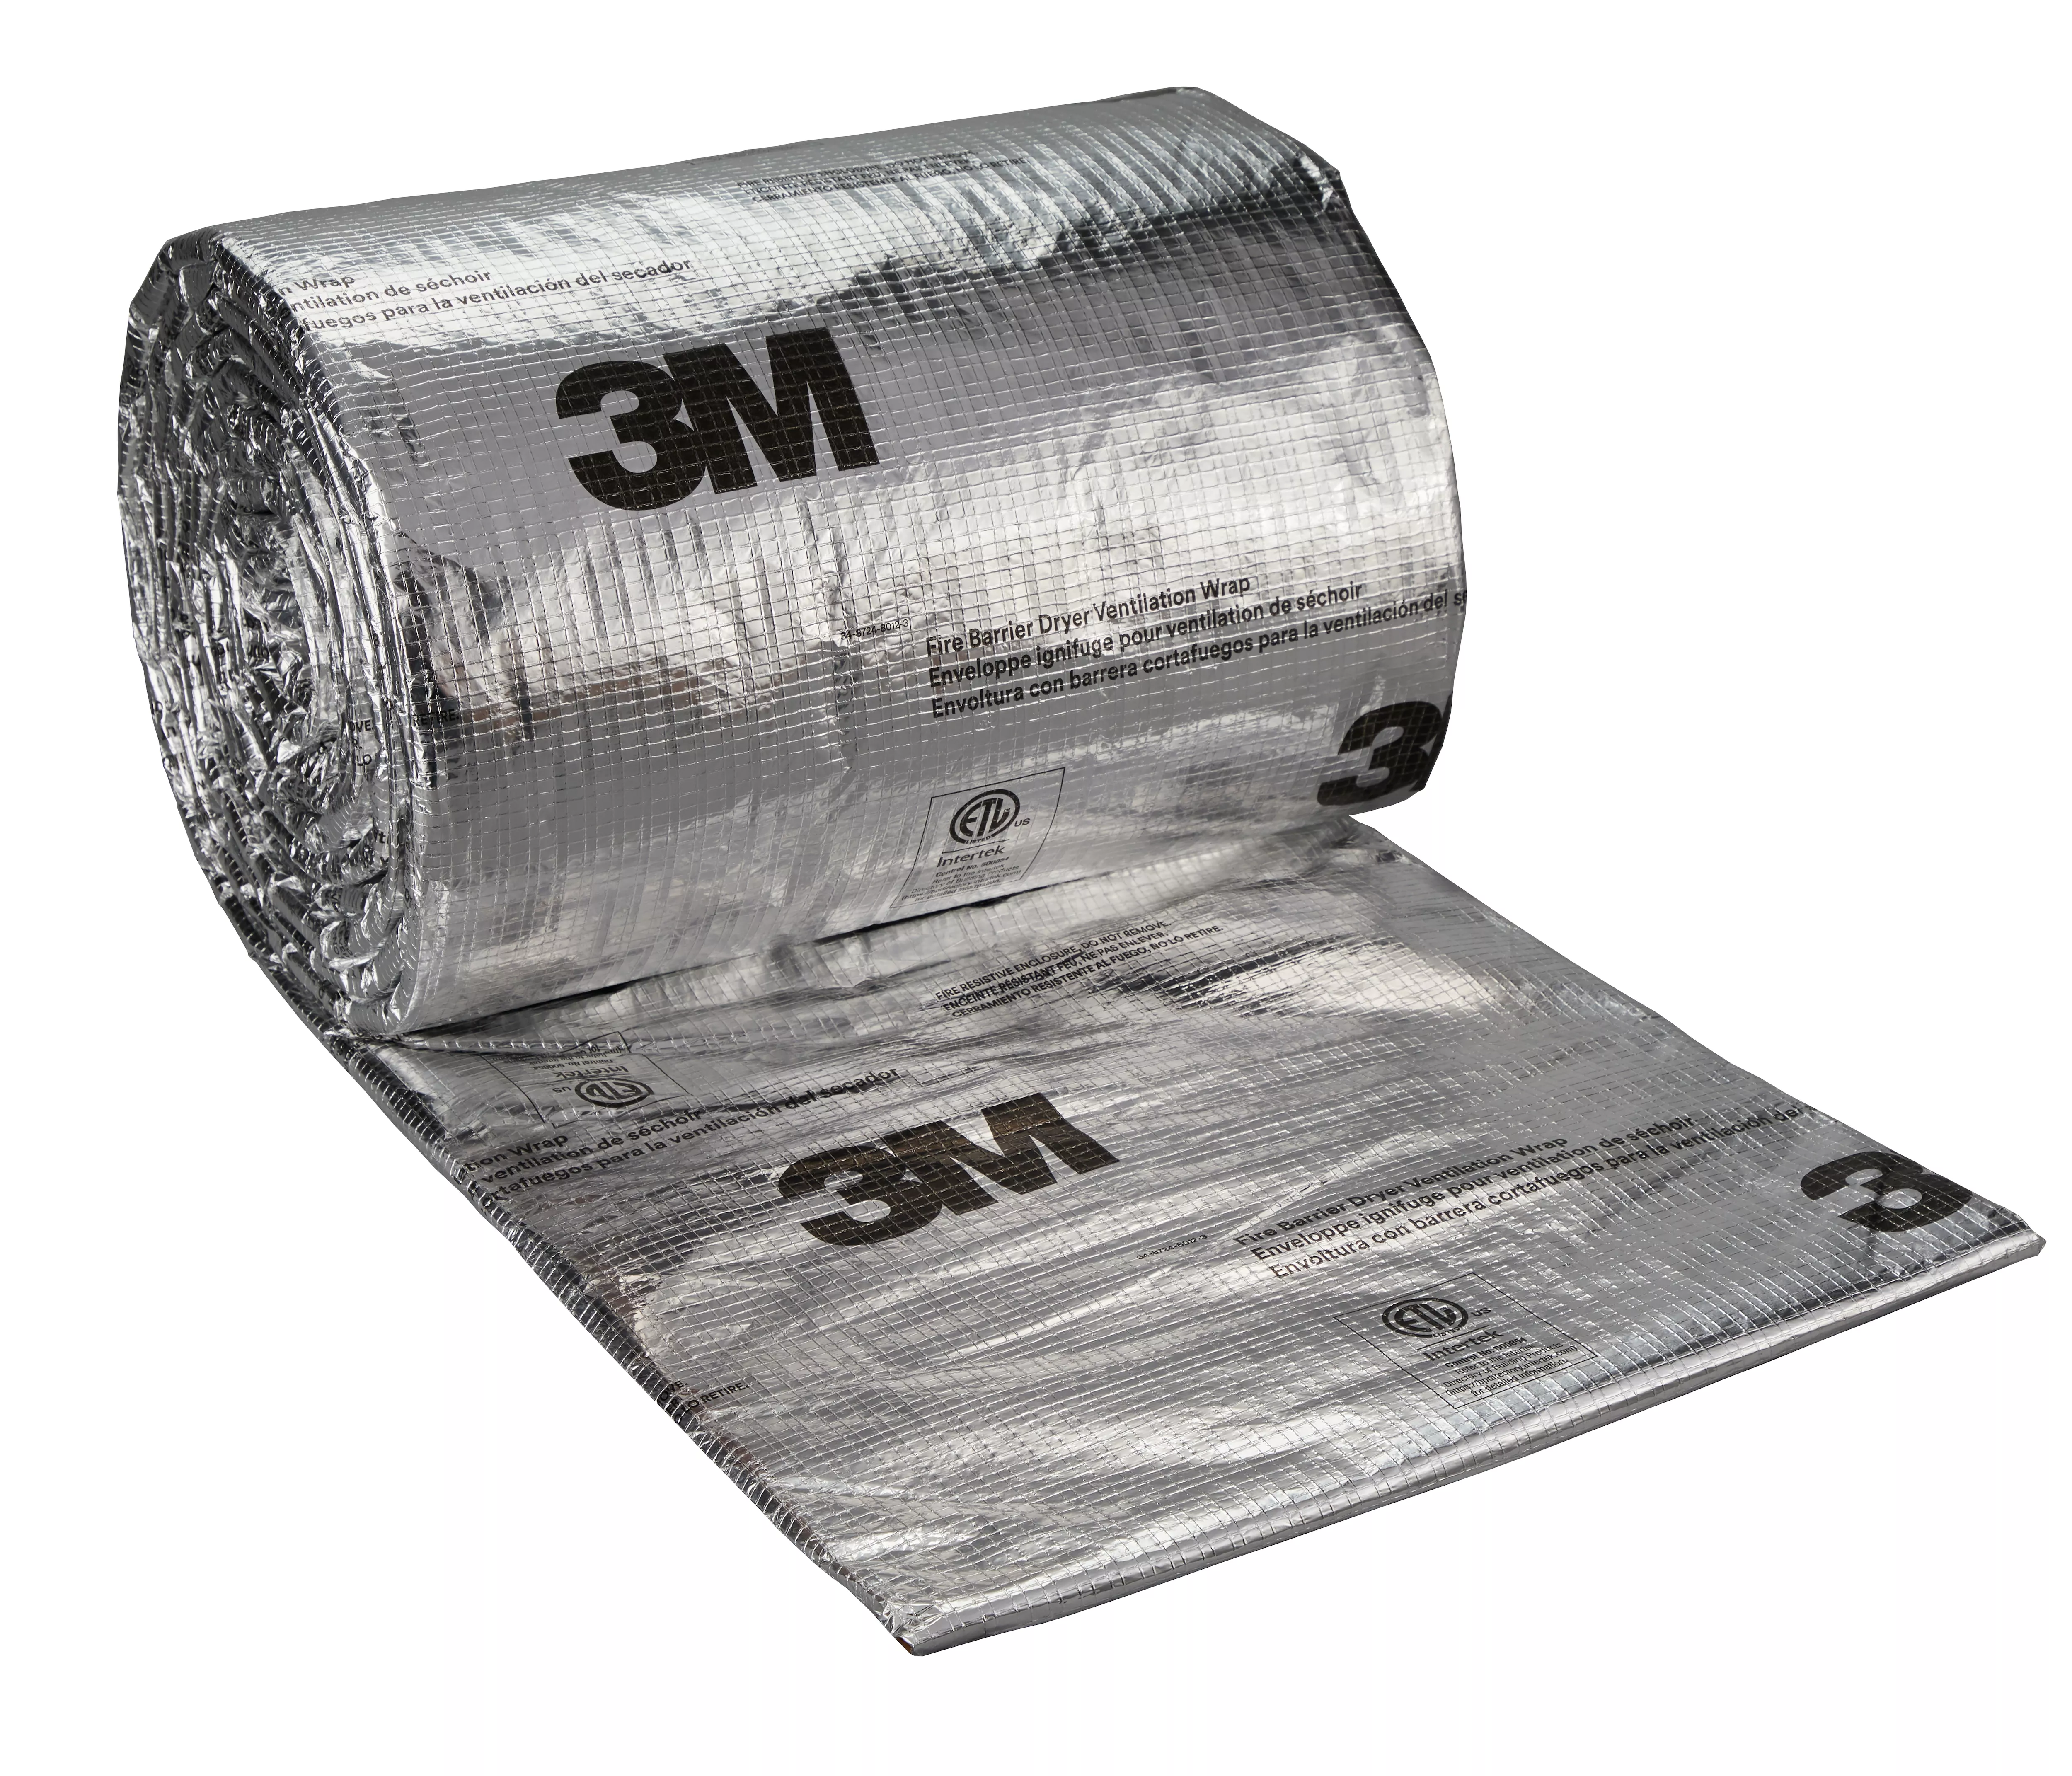 SKU 7100242388 | 3M™ Fire Barrier Dryer Ventilation Wrap DVW24